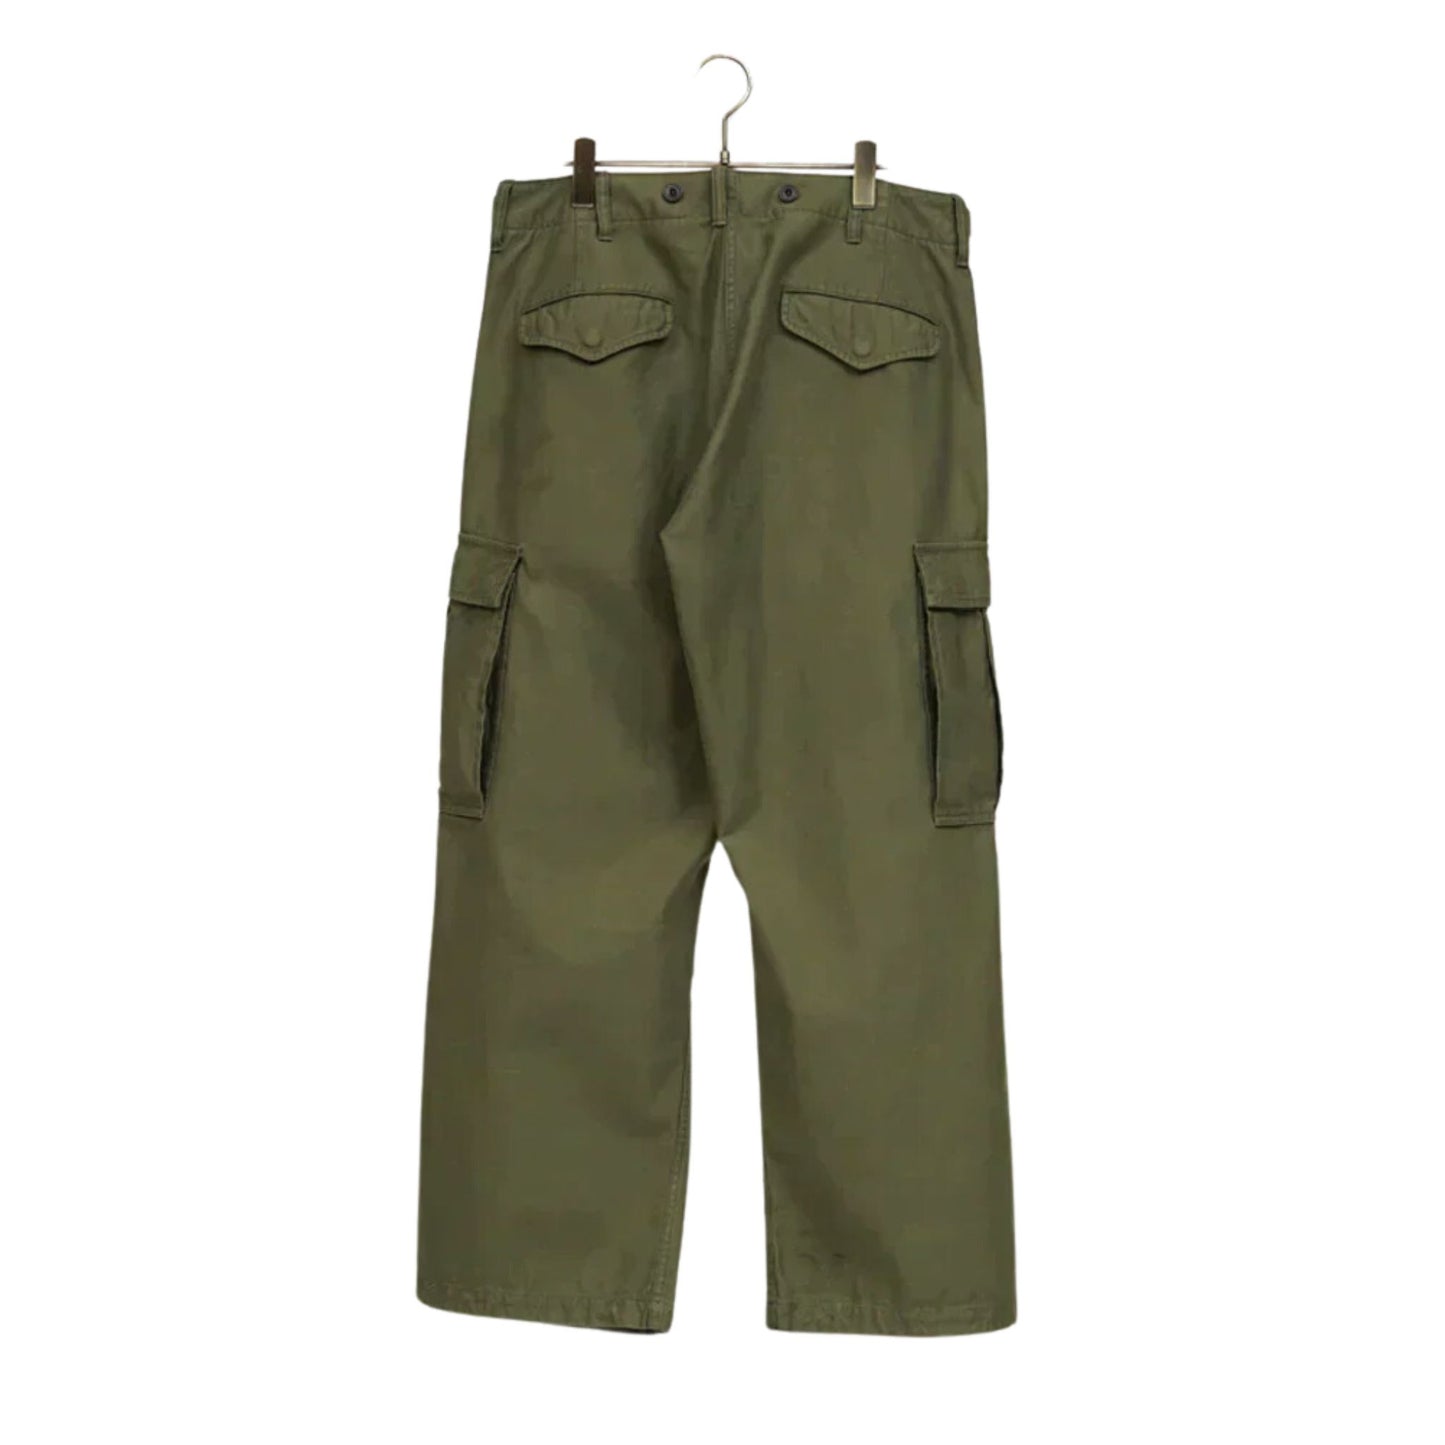 NIGEL CABOURN - Army Cargo Pant Dark Green